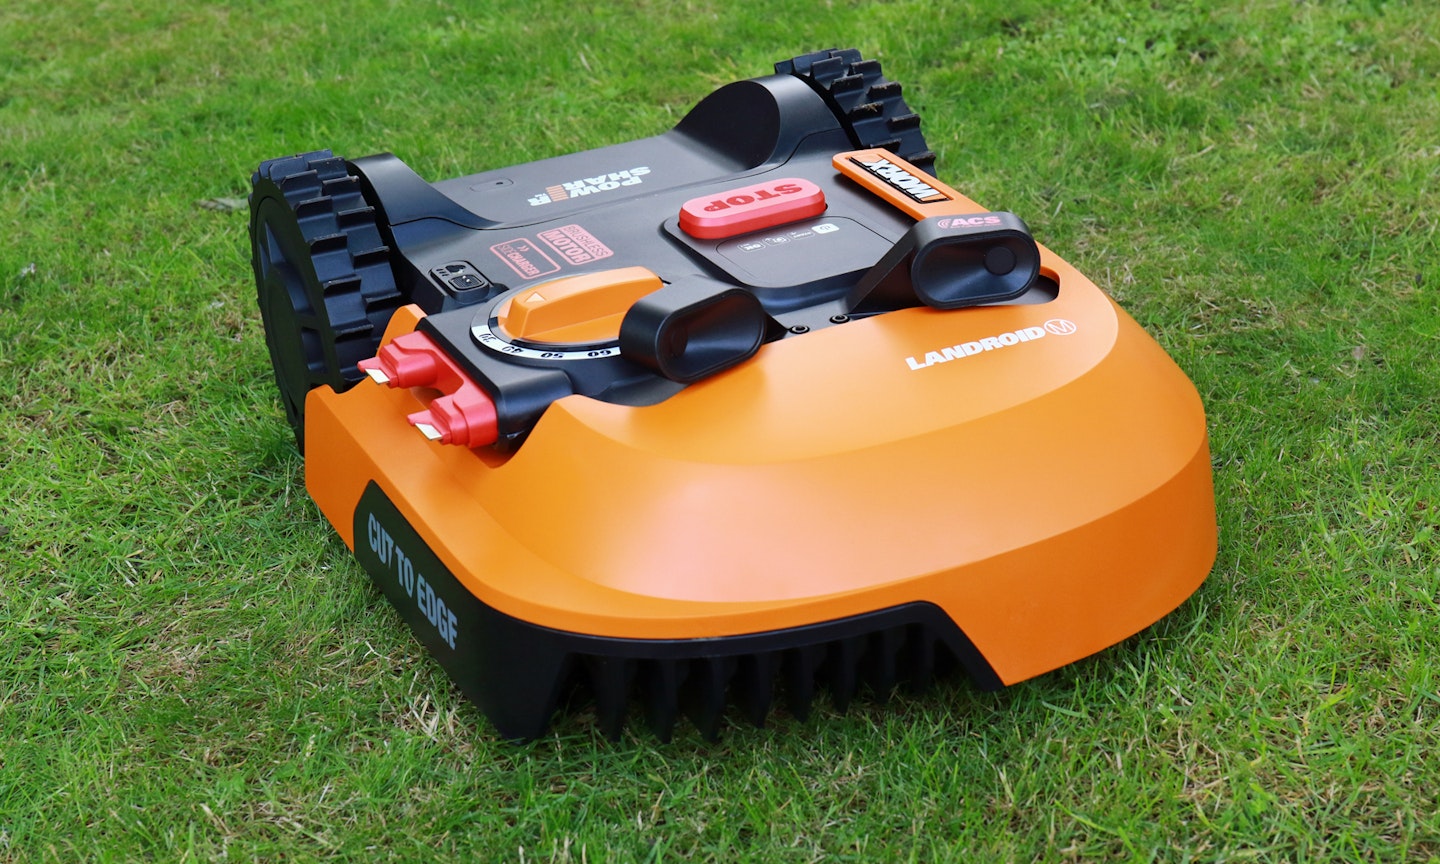 Worx Landroid M500 robotic lawnmower looking a bit sad